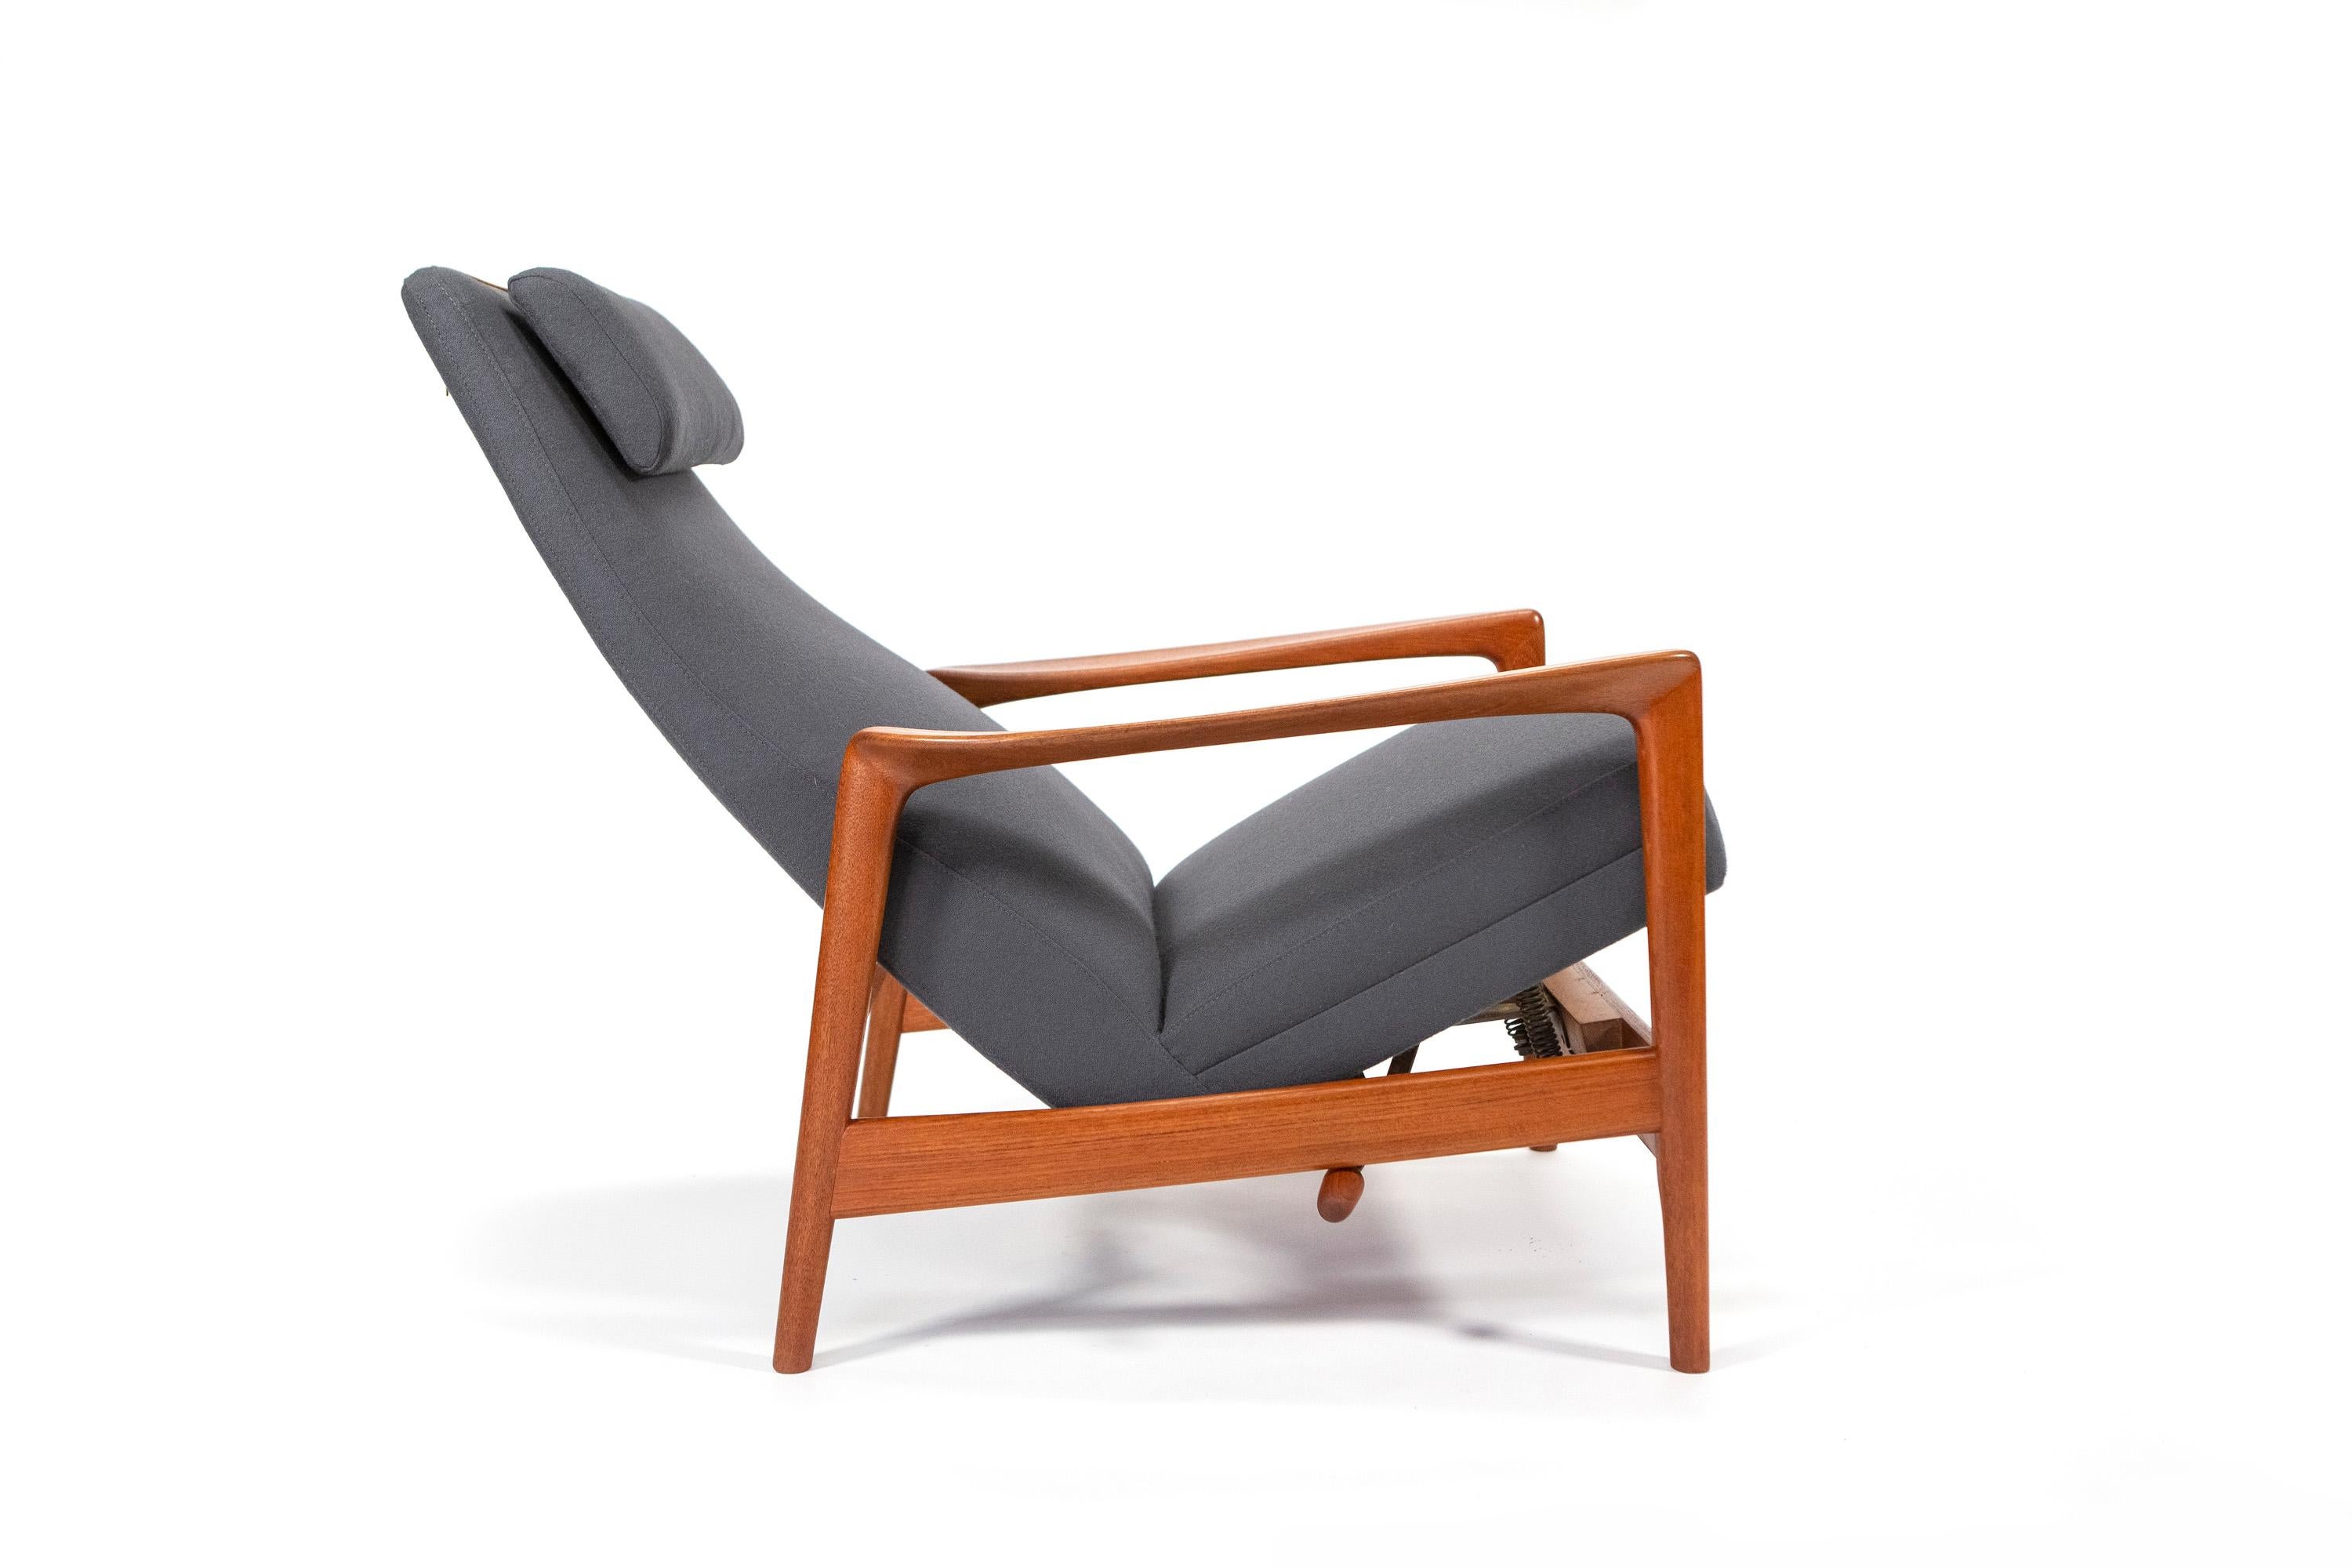 Wool Folke Ohlsson teak 'Duxiesta' Adjustable Arm Chair by DUX - Sweden 1960's For Sale